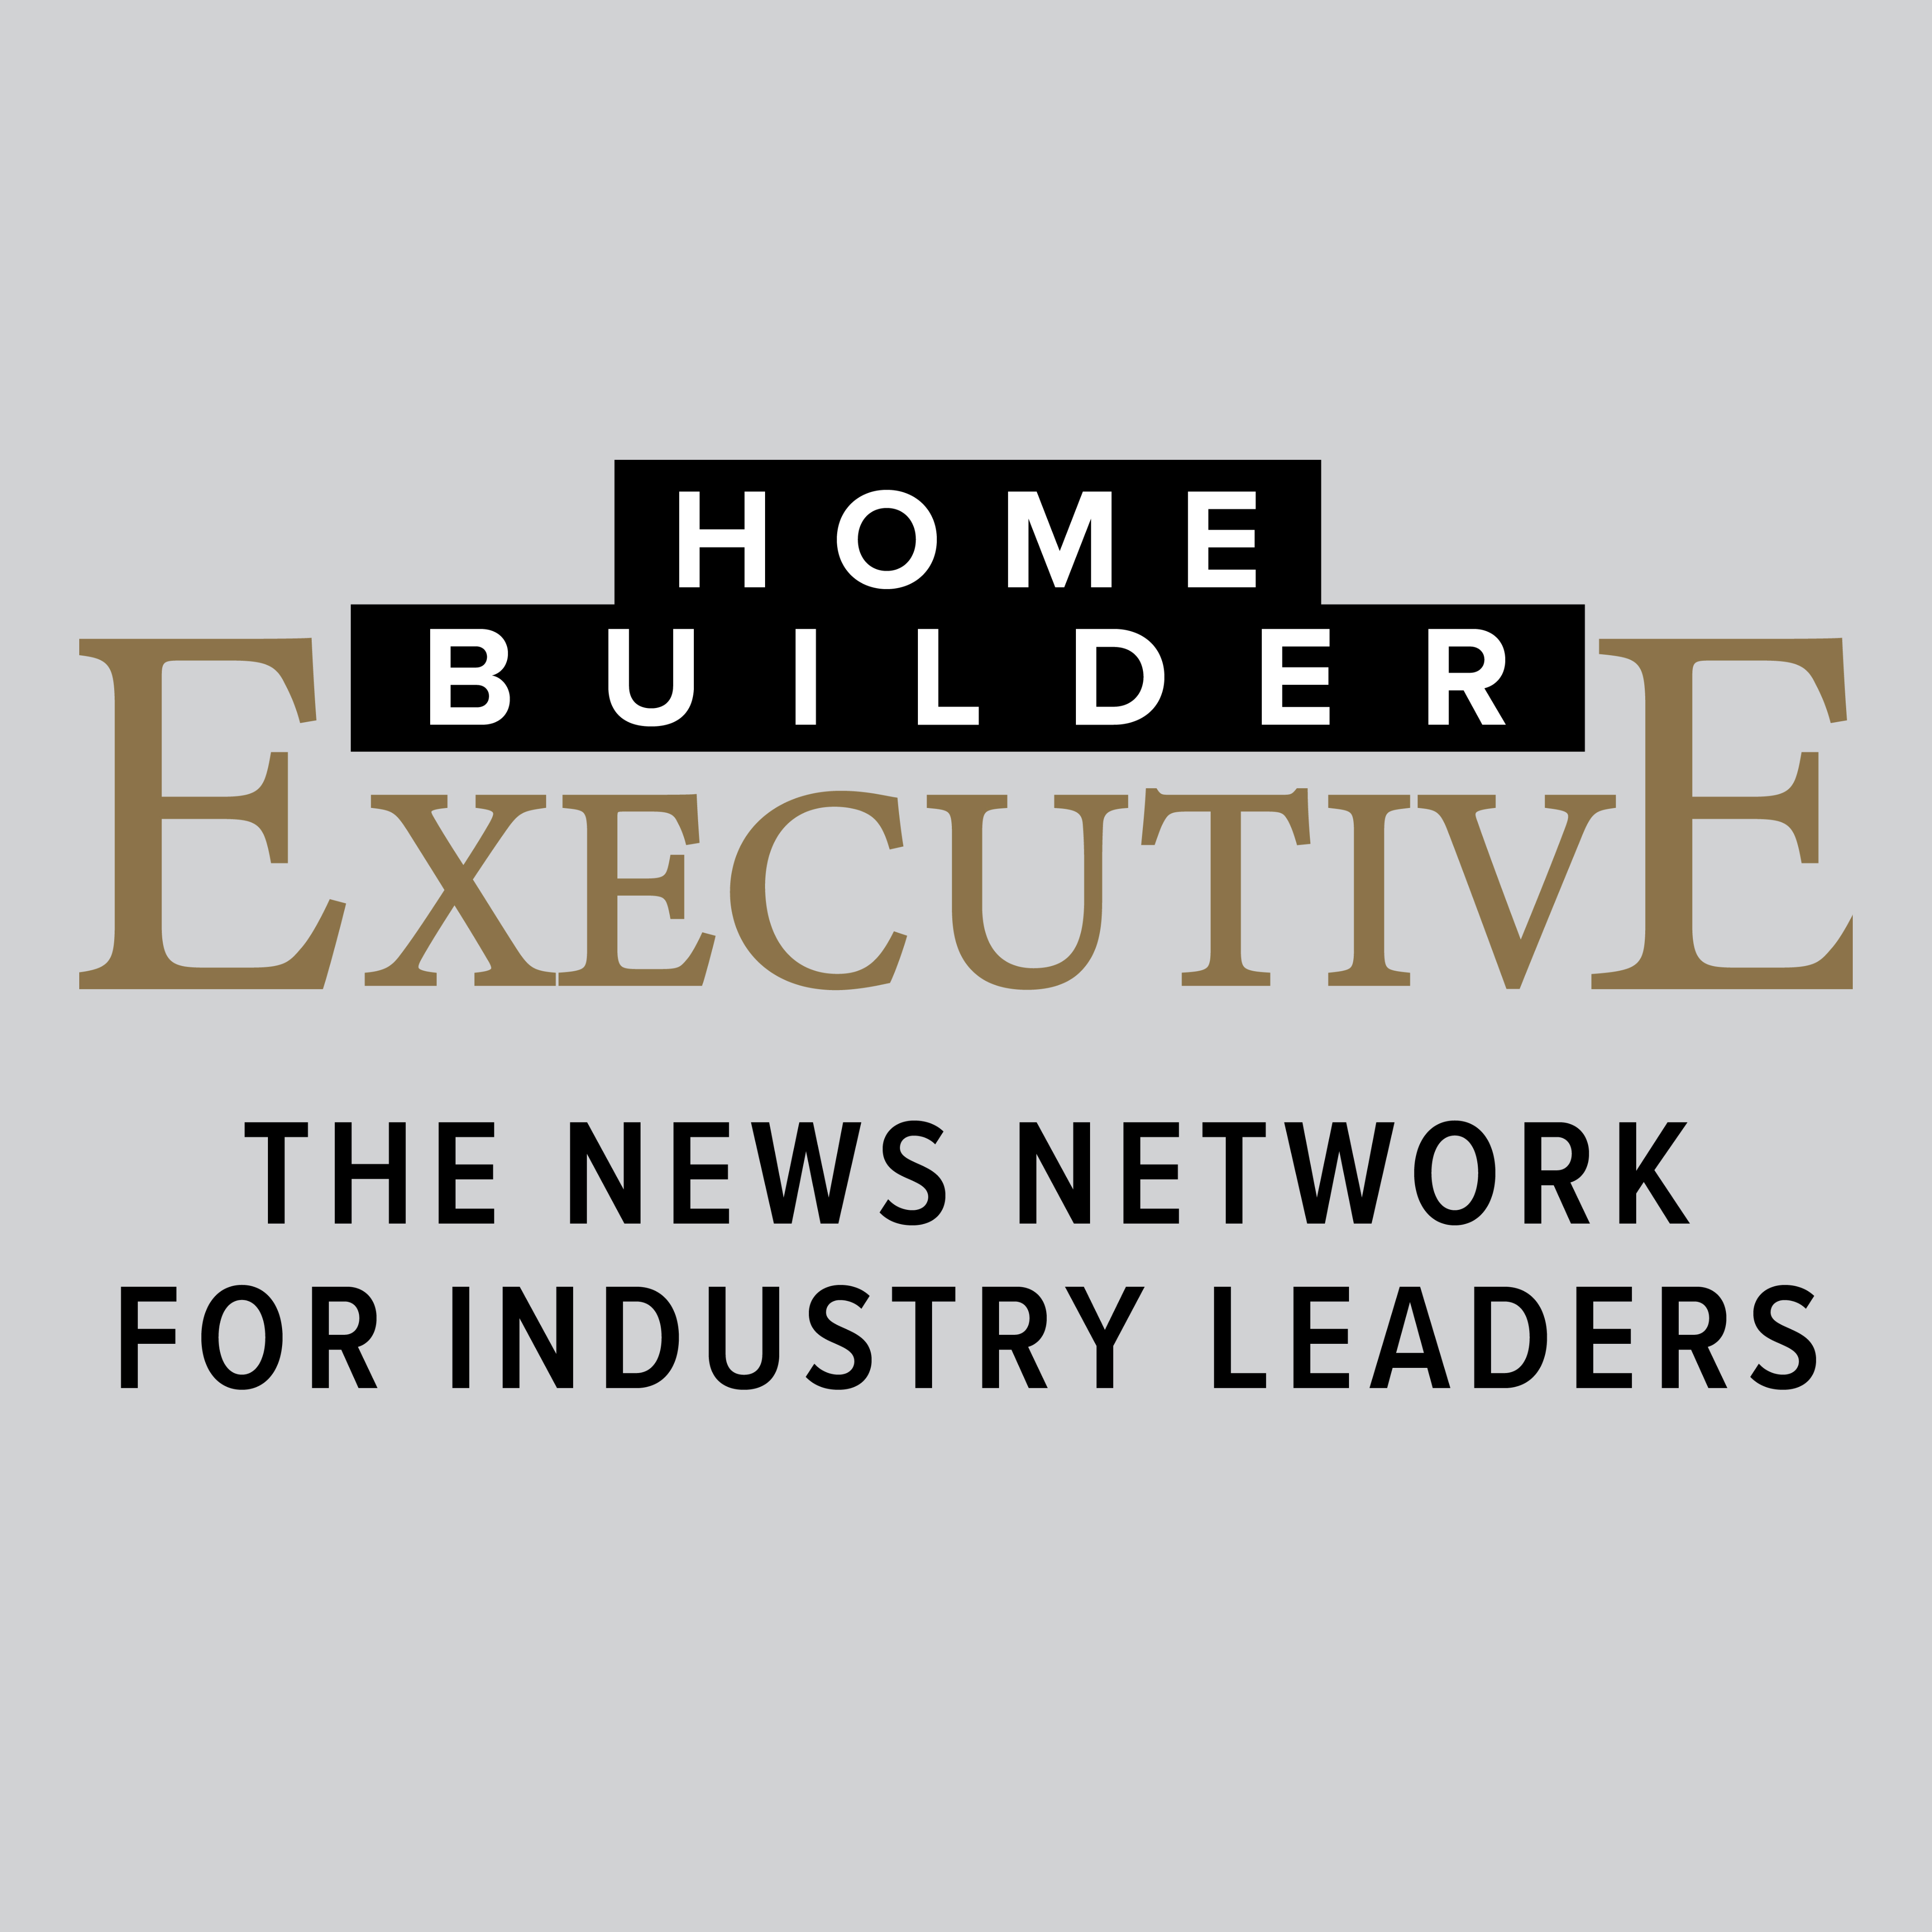 Home Builder Executive Logo